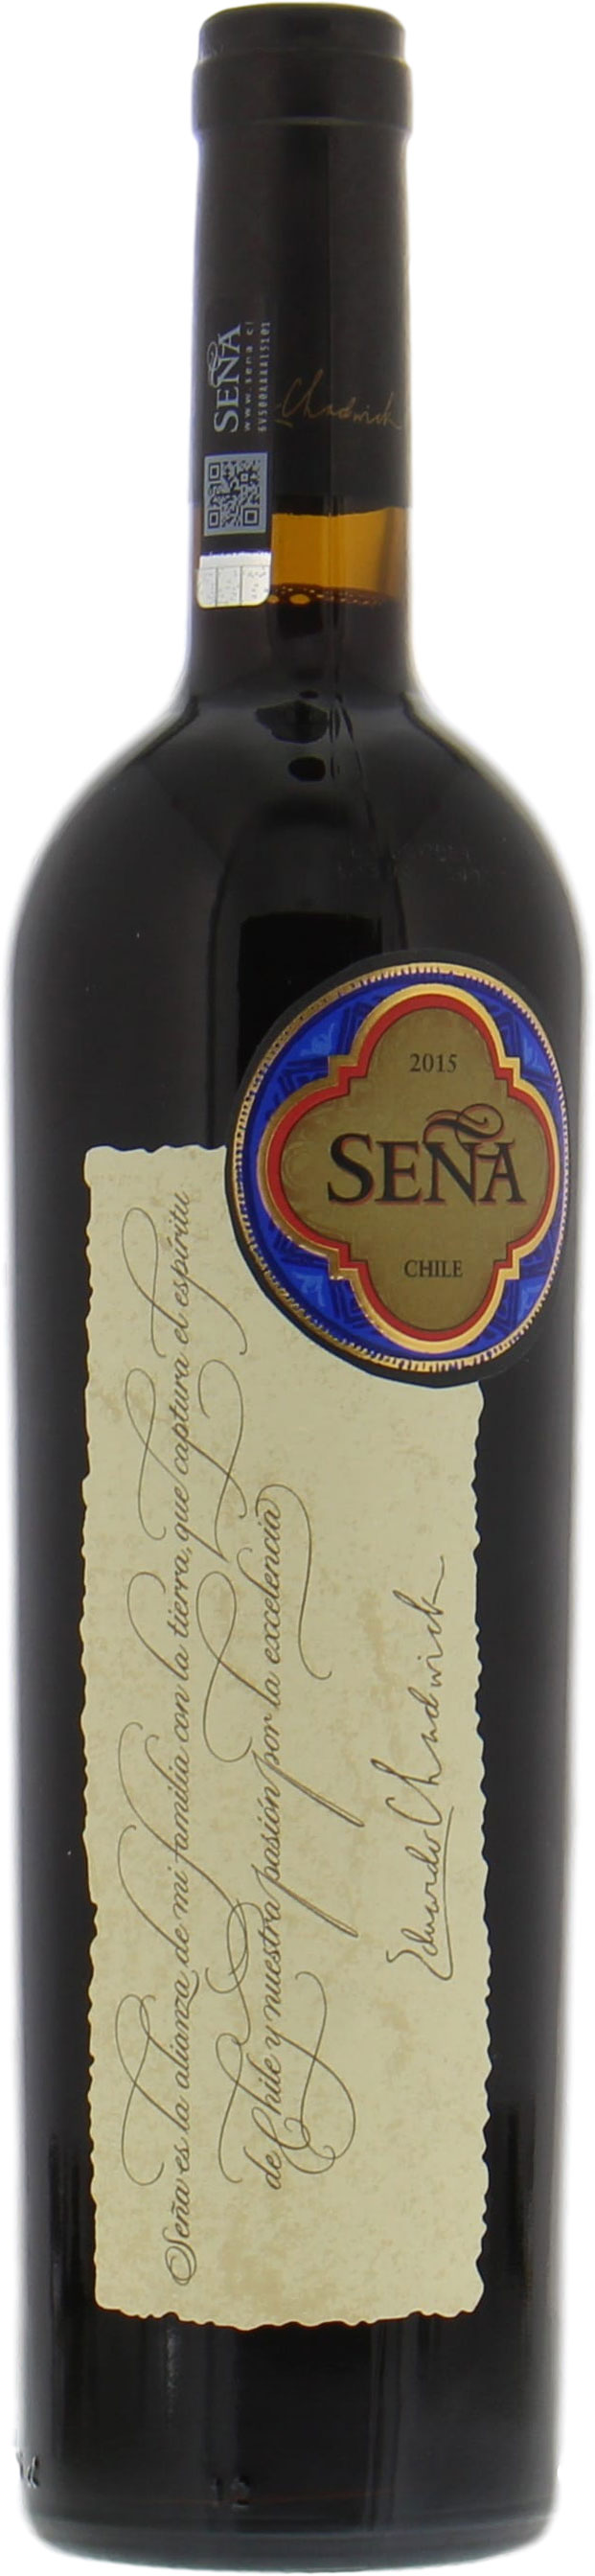 Sena 2015 Vina Sena | Buy Online | Best of Wines